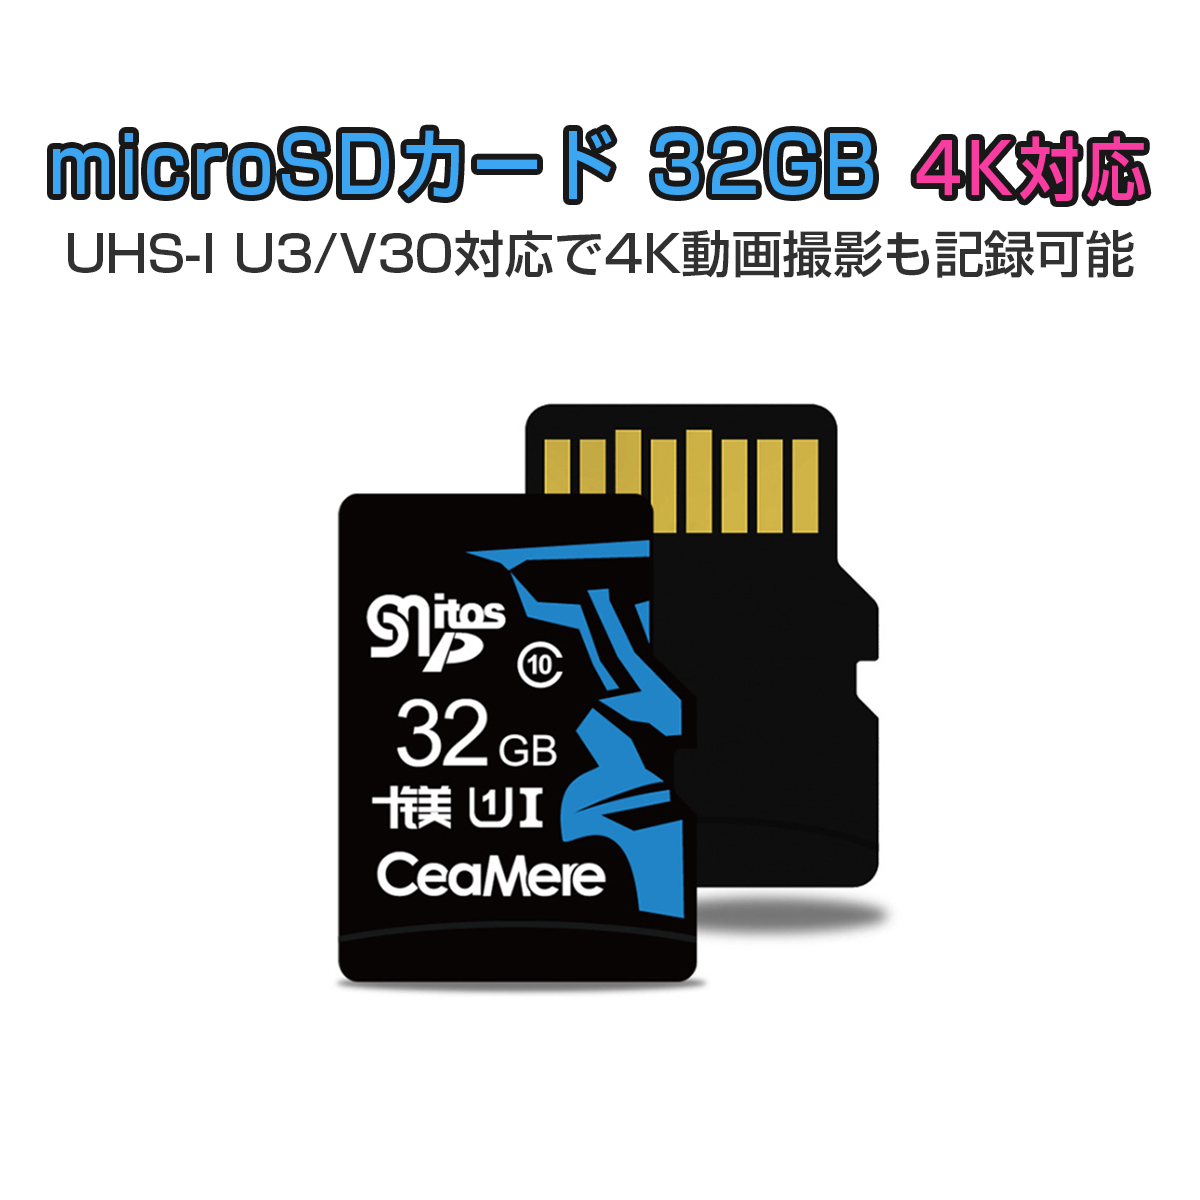 MicroSDカード 32GB UHS-I V30 超高速 最大90MB/sec 3D MLC NAND採用 ASチップ 高耐久 MicroSD マイクロSD microSDXC 300x SDカード変換アダプタ USBカードリーダー付き SDM便送料無料 6ヶ月保証